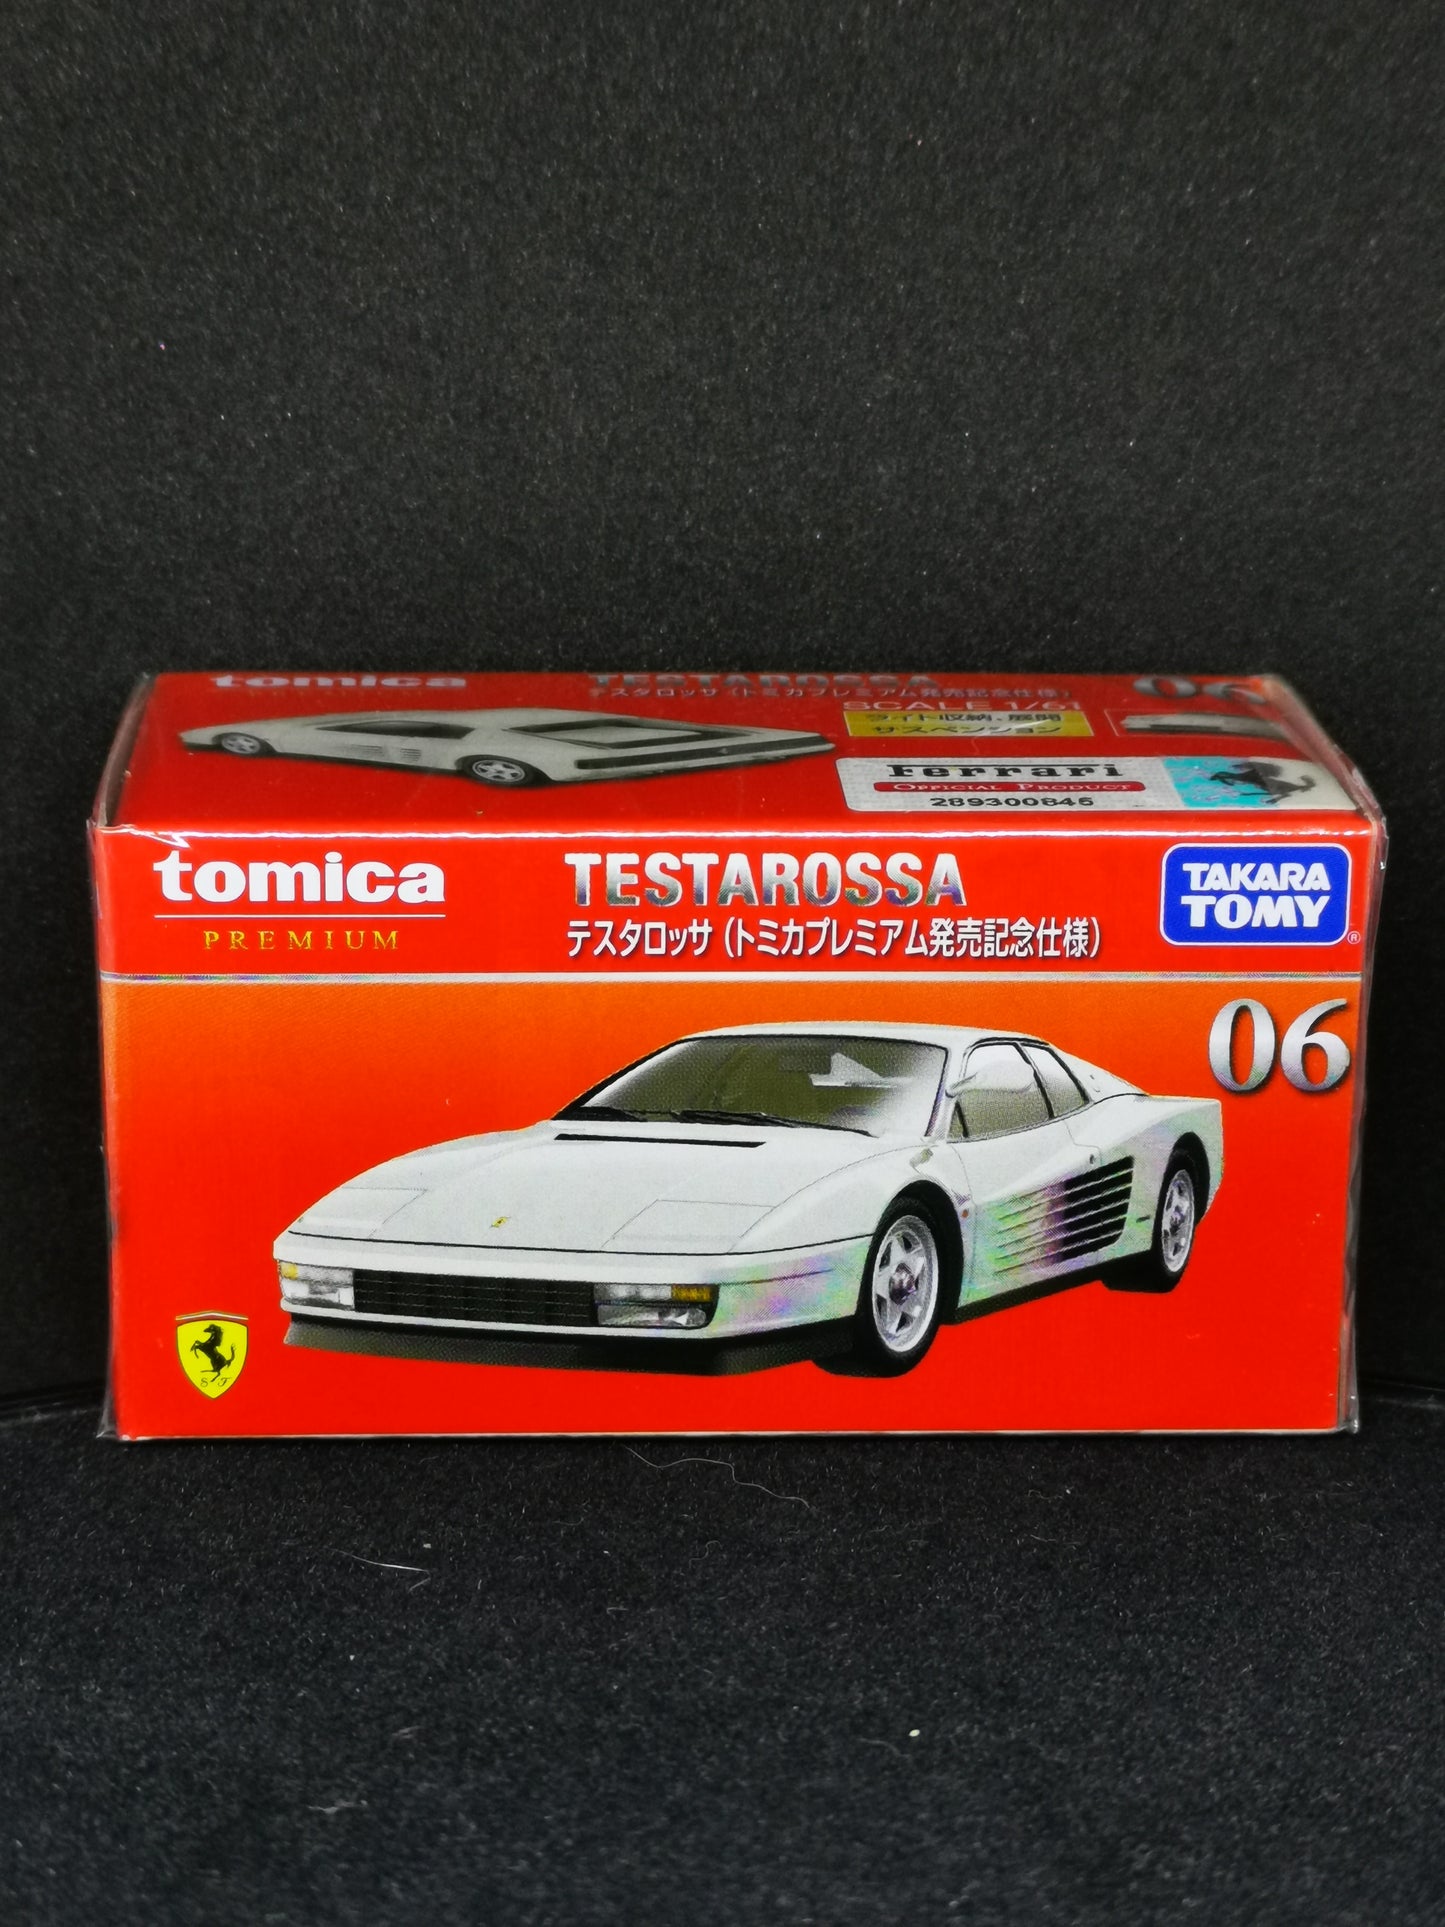 Tomica Premium No.06 Ferrari Testarossa 1st edition